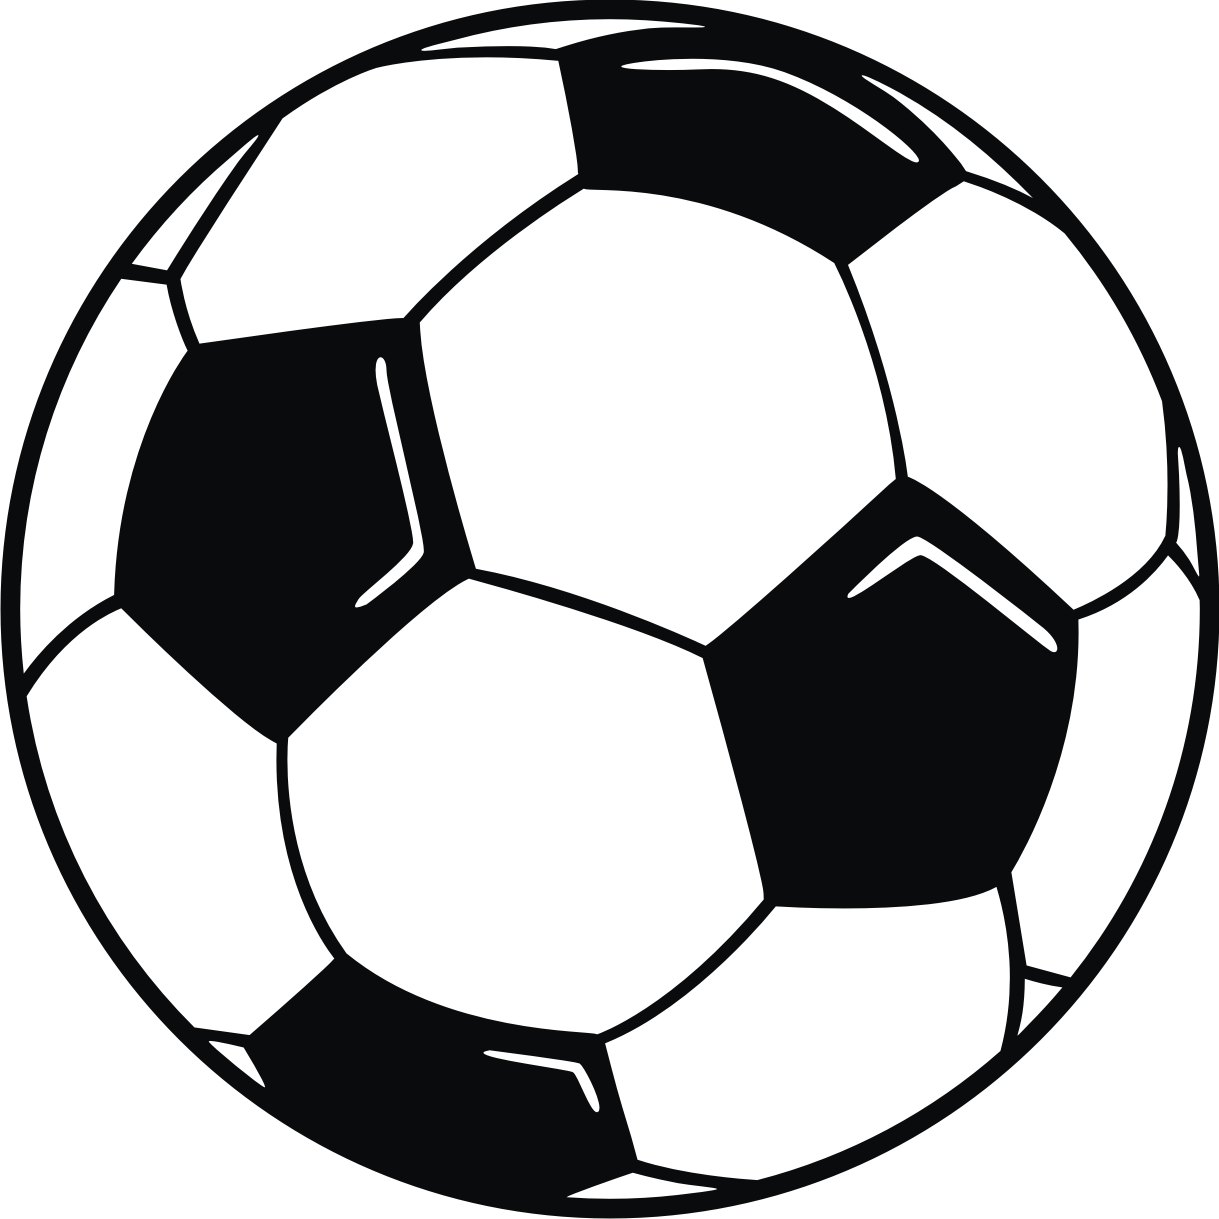 Soccer ball border clip art free clipart images